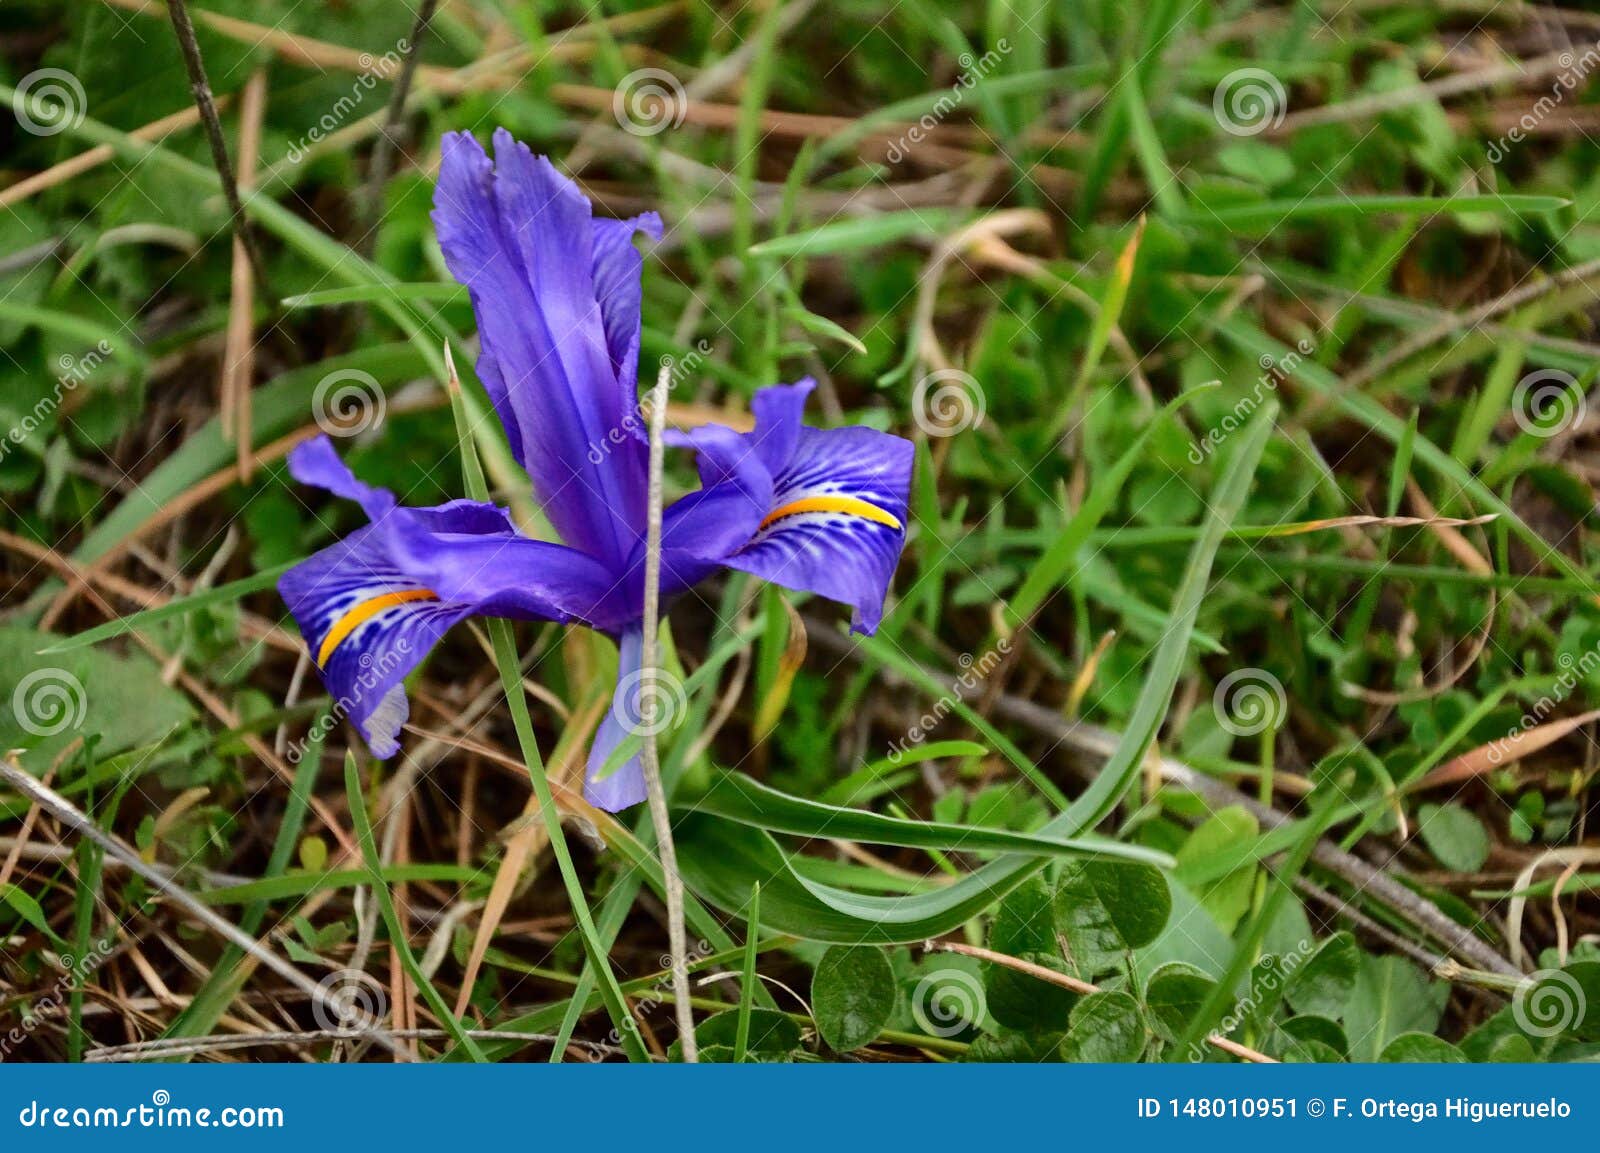 violet flower in spring, flor violeta en campo primavera, spain